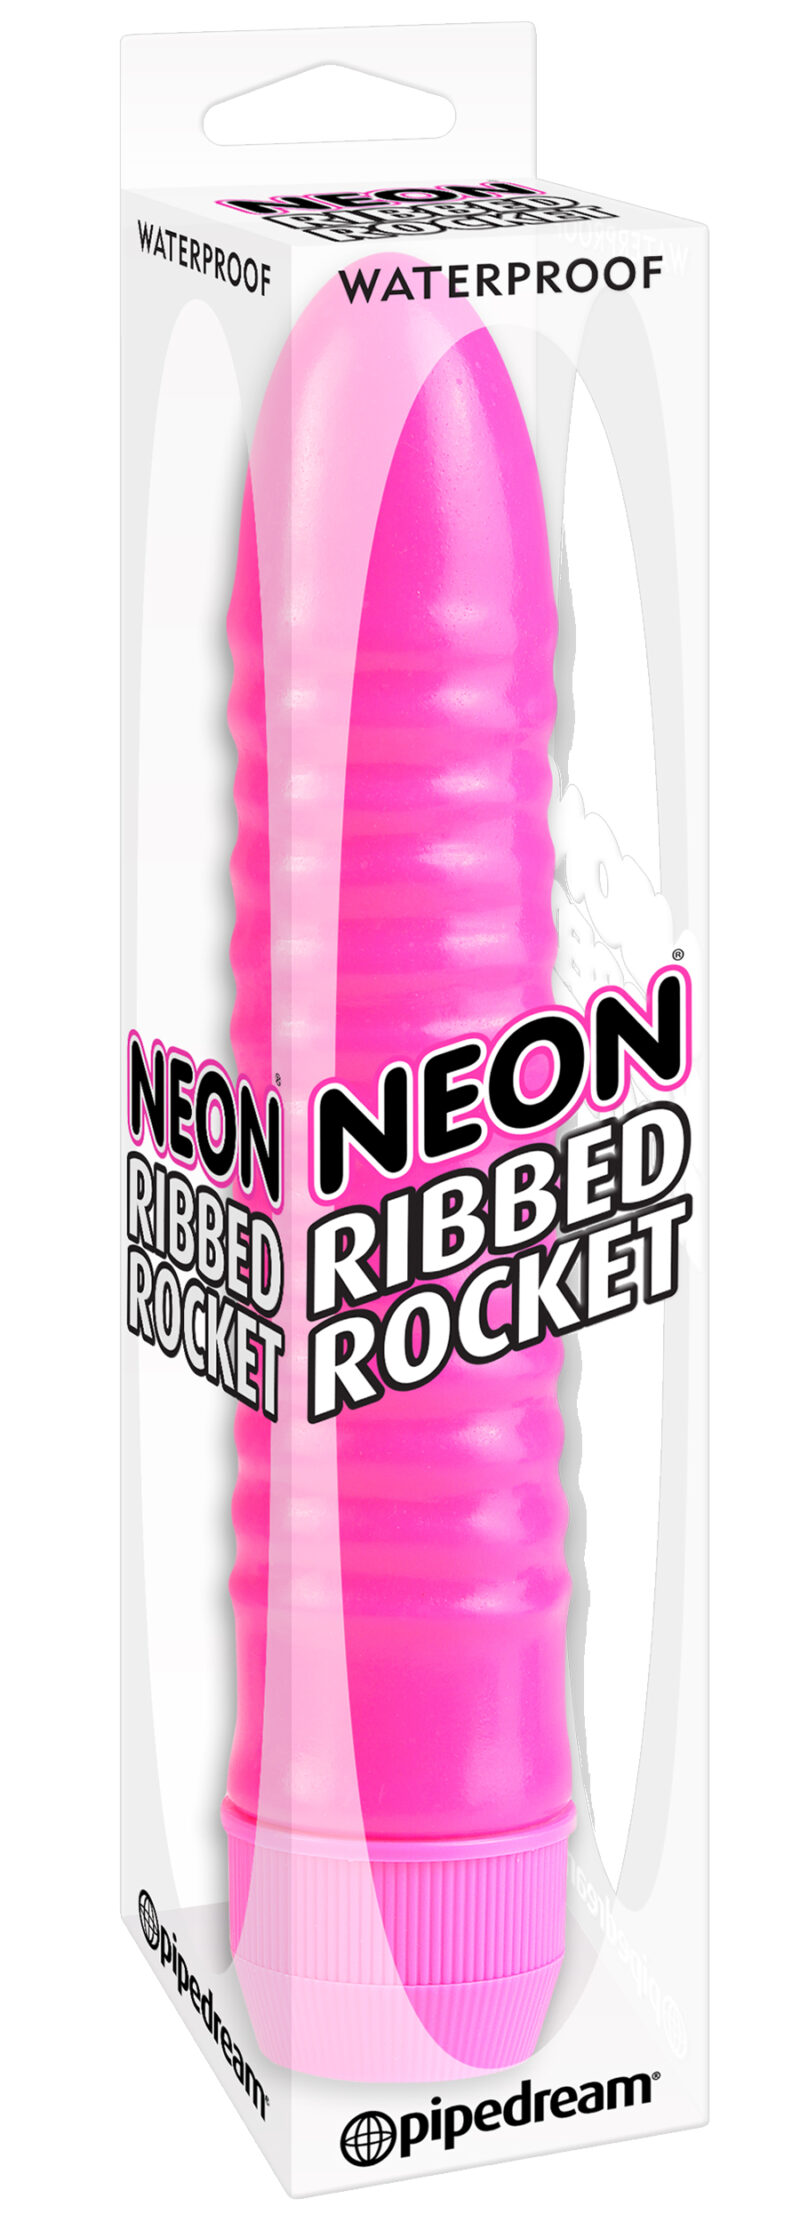 Pipedream Neon Ribbed Rocket Vibrator